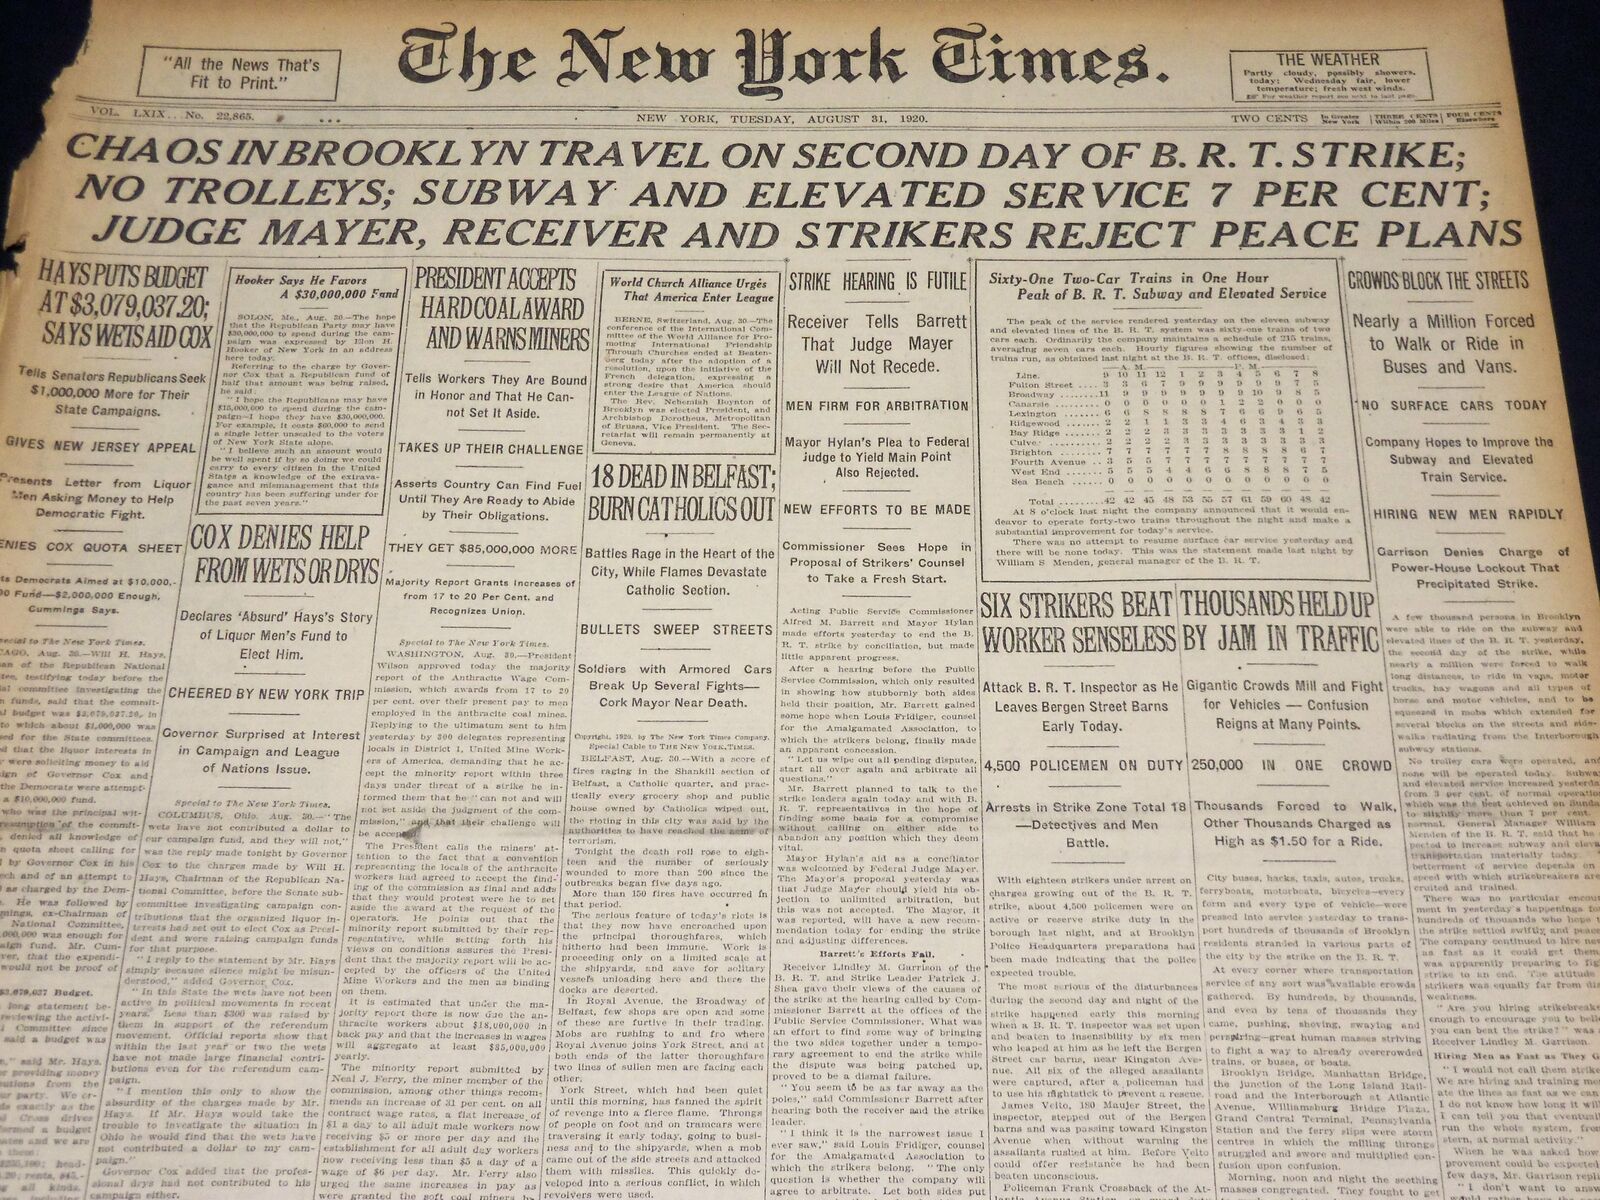 1920 AUGUST 31 NEW YORK TIMES - CHAOSIN BROOKLYN B.R.T. STRIKE - NT 8562